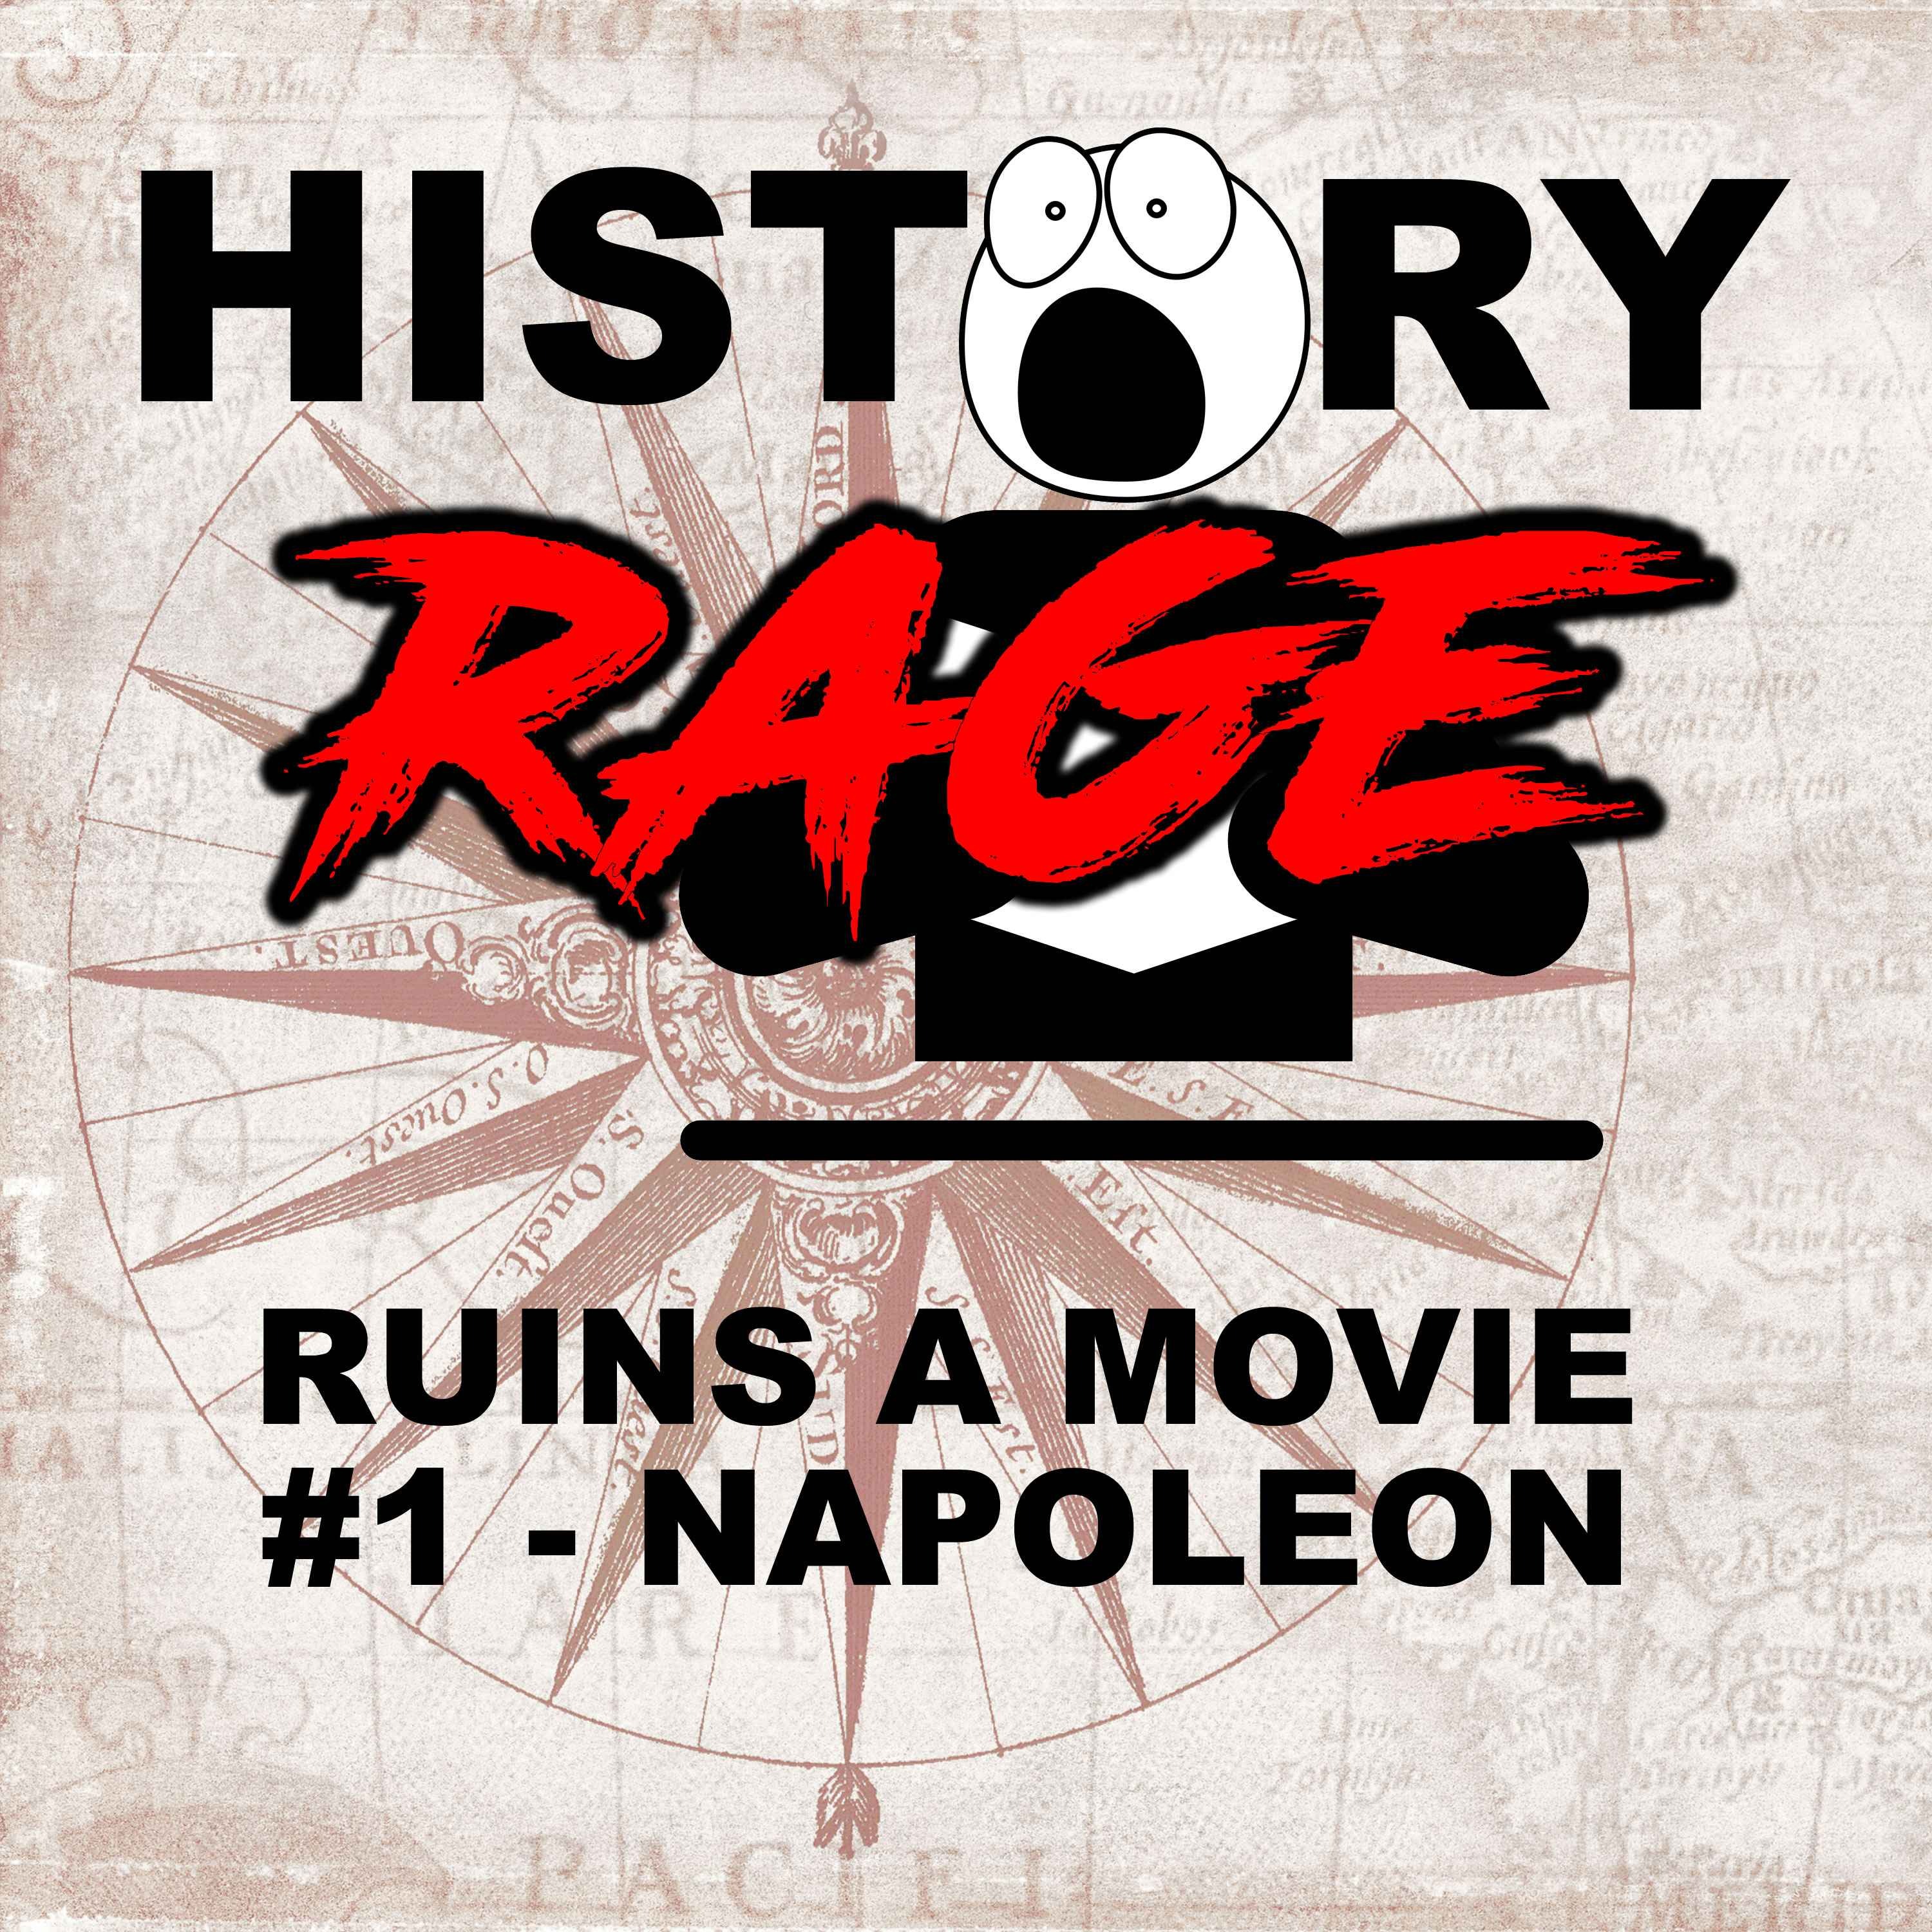 SPOILER WARNING: Dr. Zack White Rips Apart the Napoleon Movie